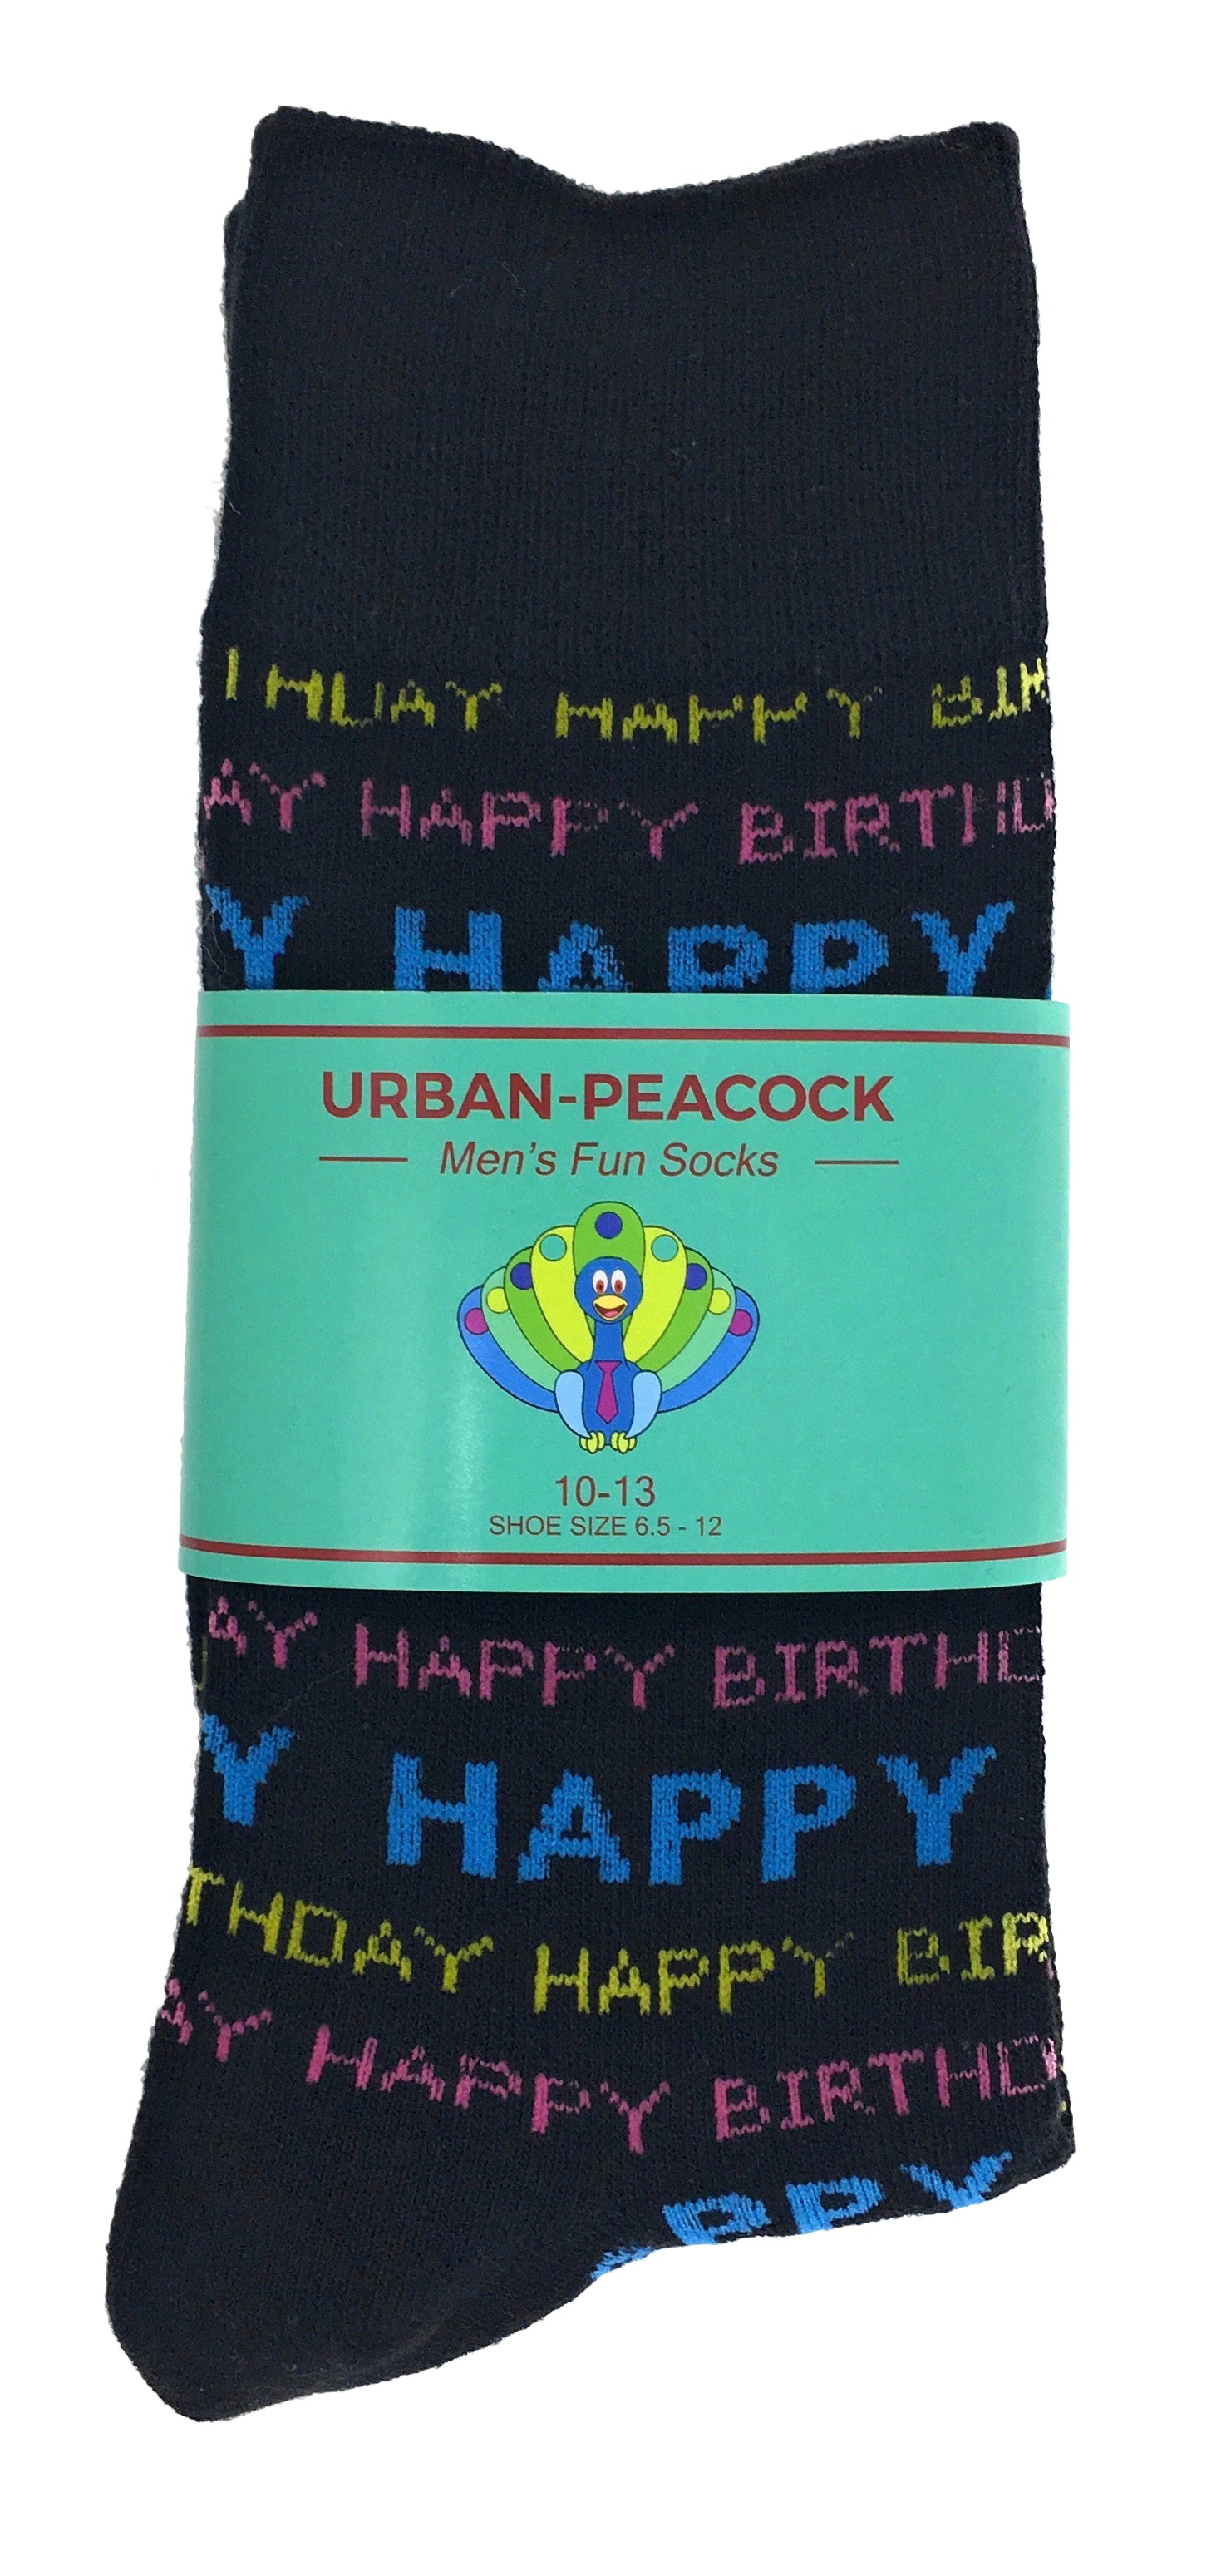 Urban-Peacock Men's Novelty Crew Socks - Happy Birthday - Black